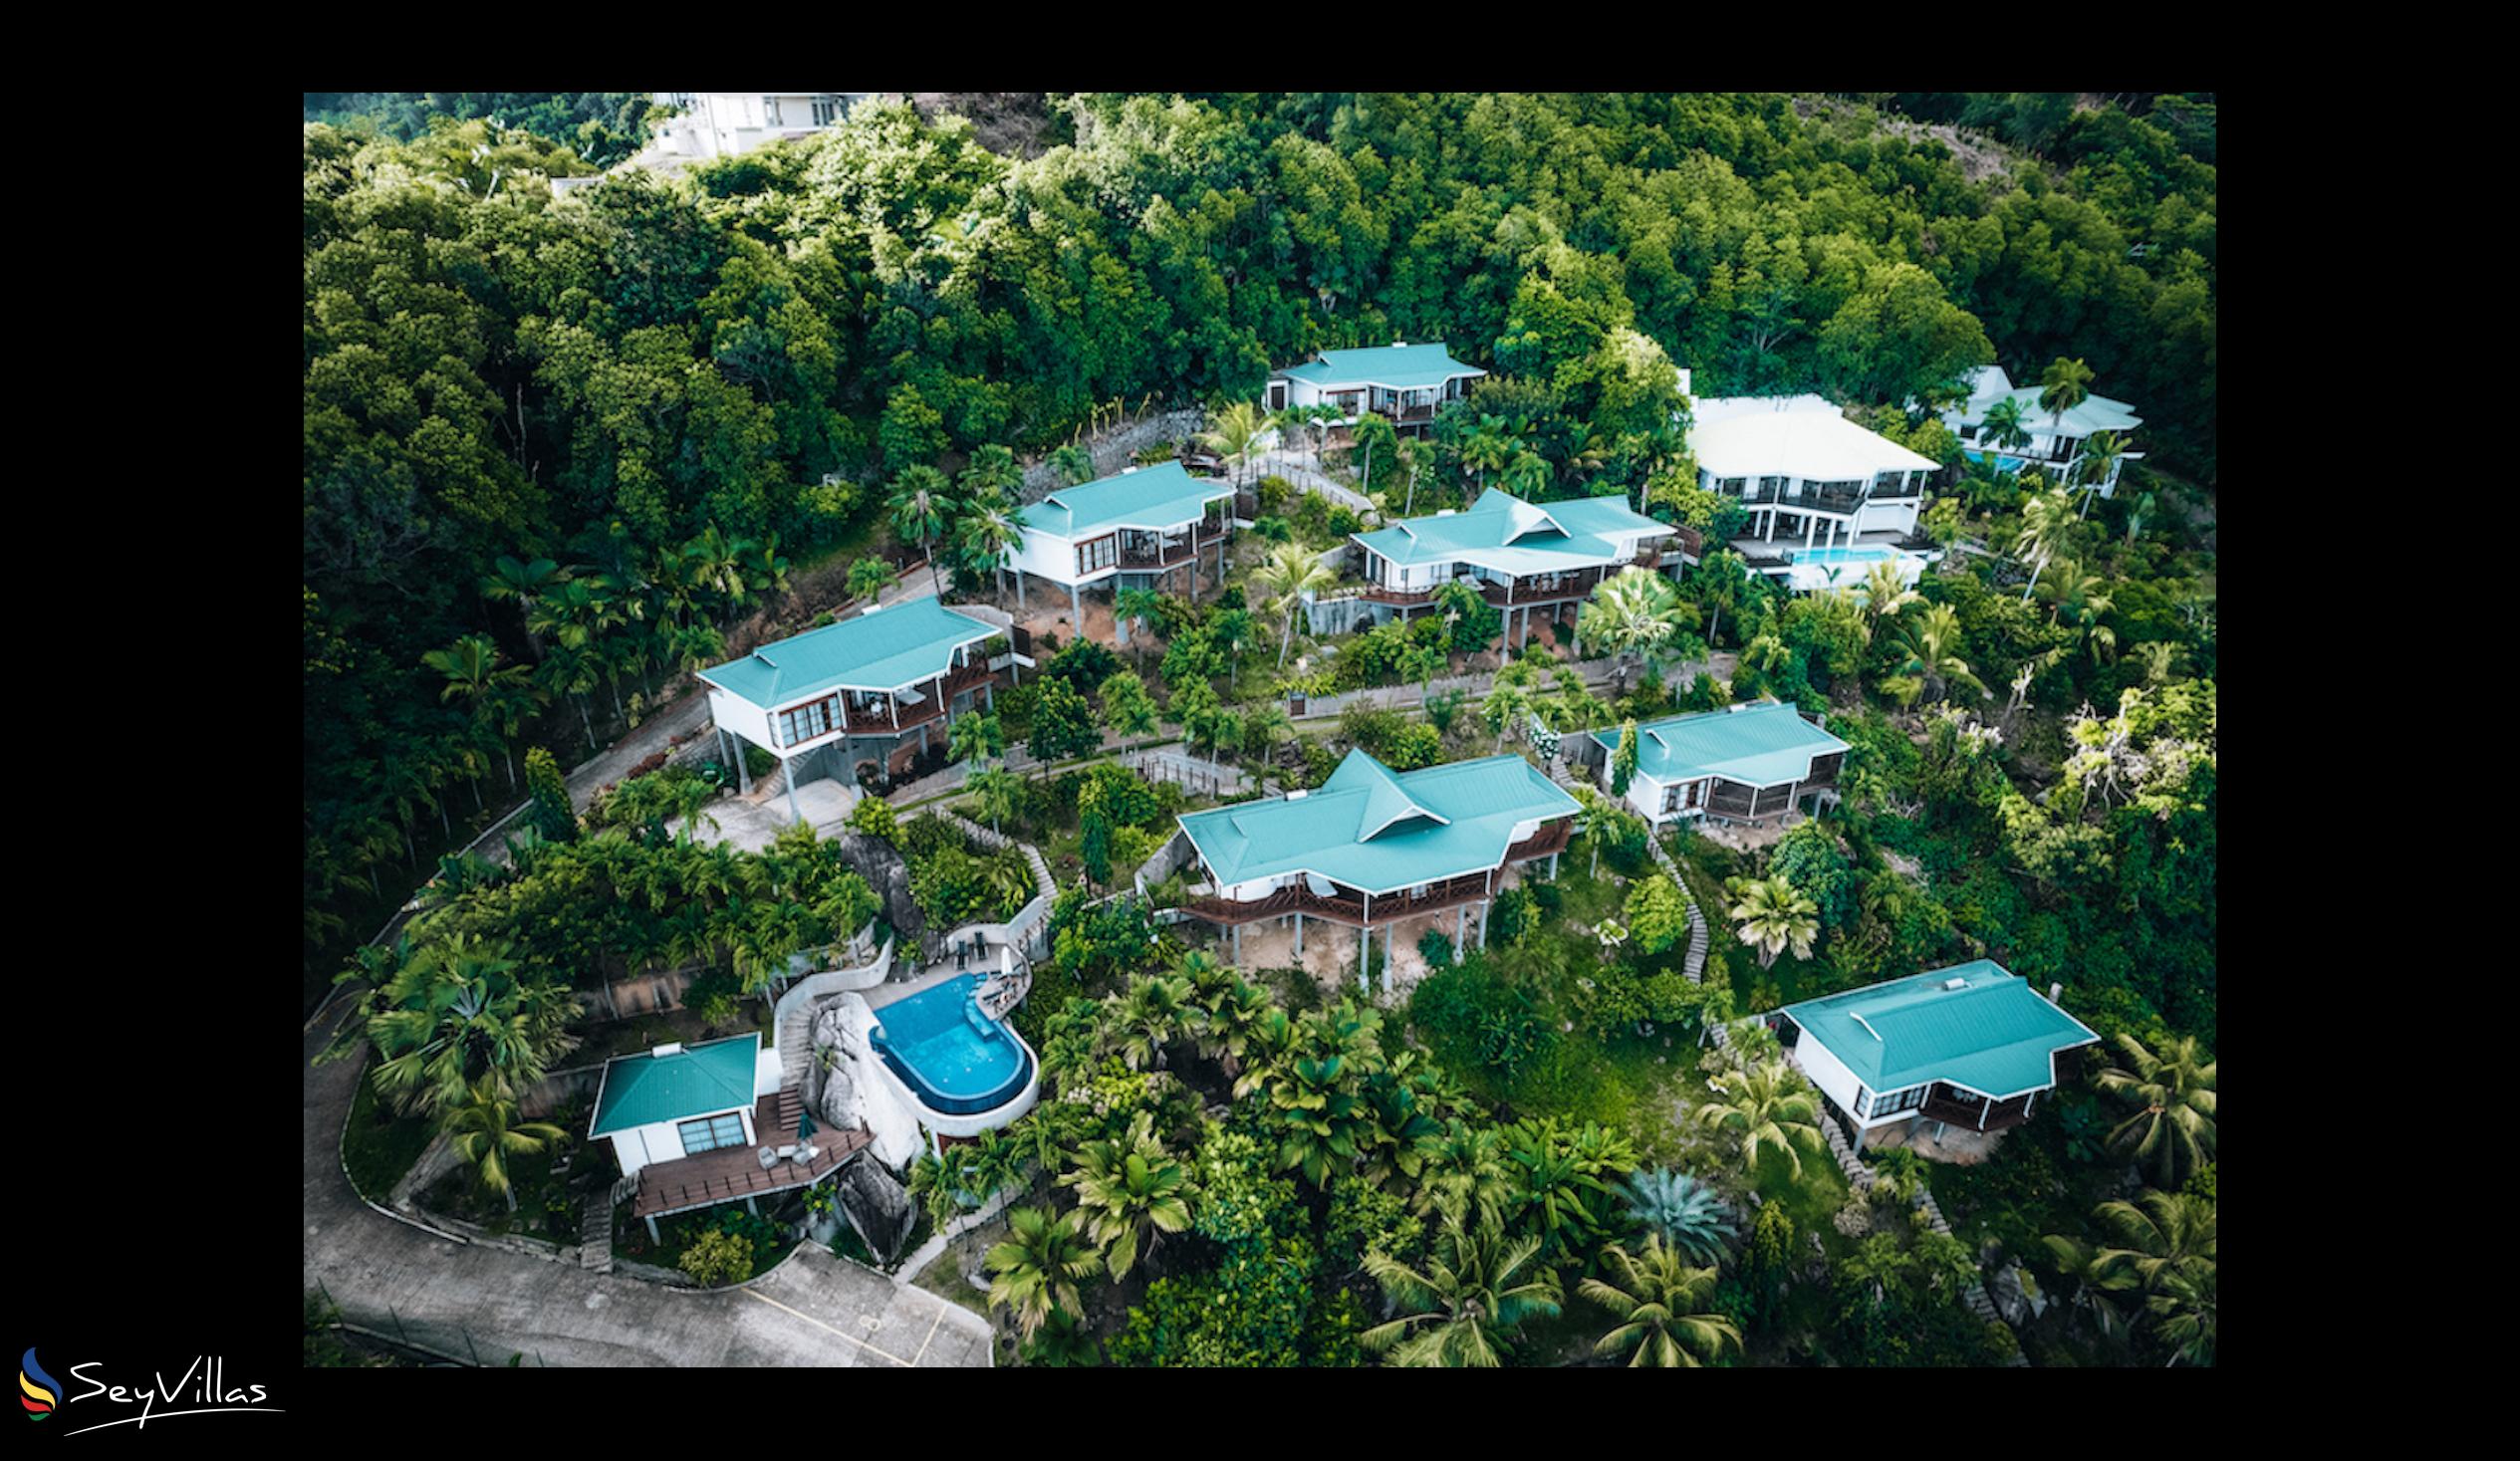 Photo 7: Villas de Jardin - Outdoor area - Mahé (Seychelles)